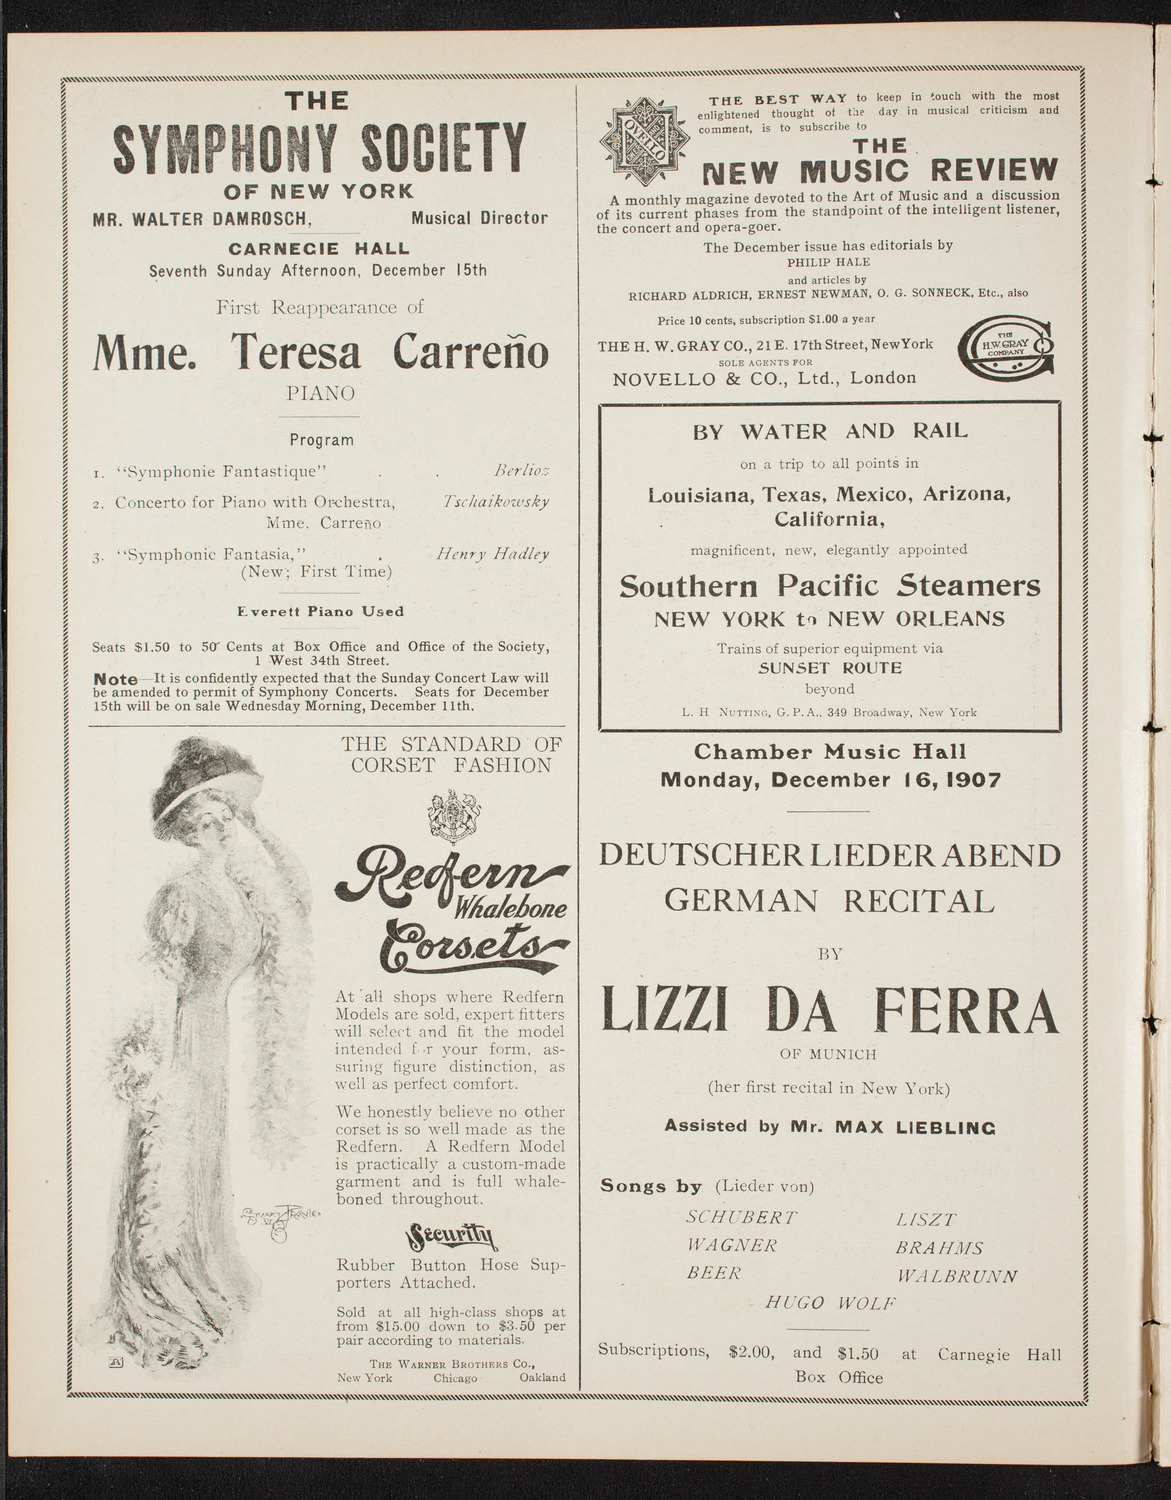 New York Philharmonic, December 13, 1907, program page 2